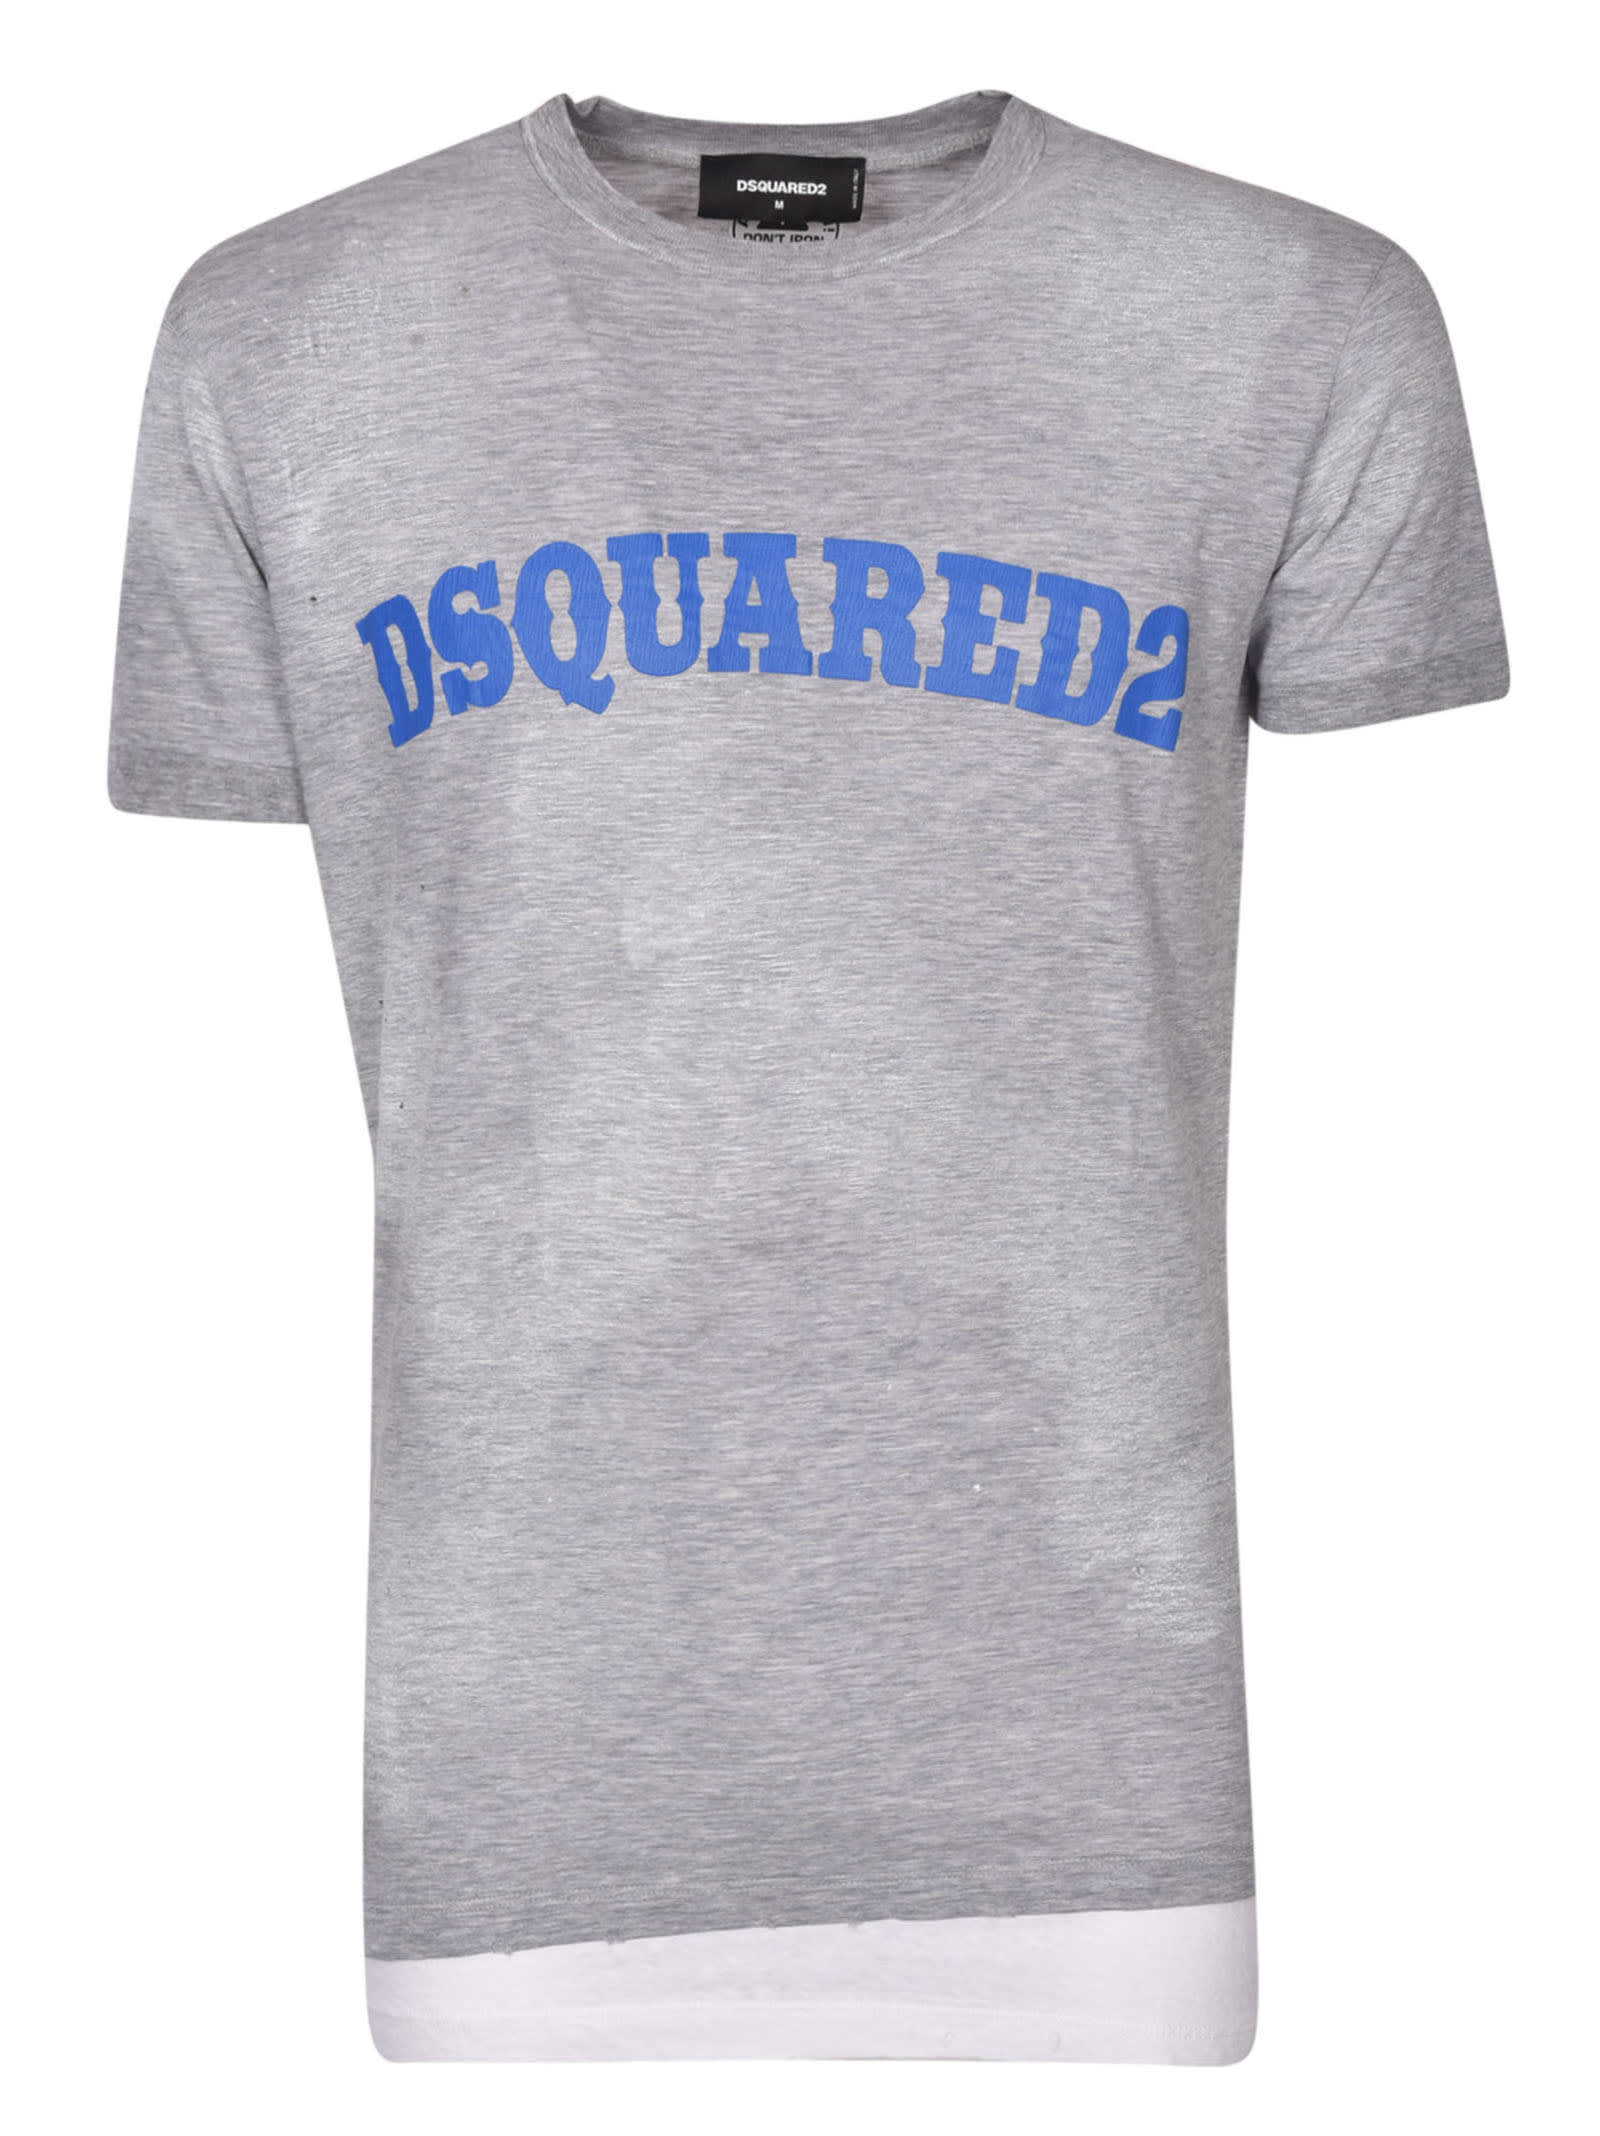 dsquared2 grey t shirt